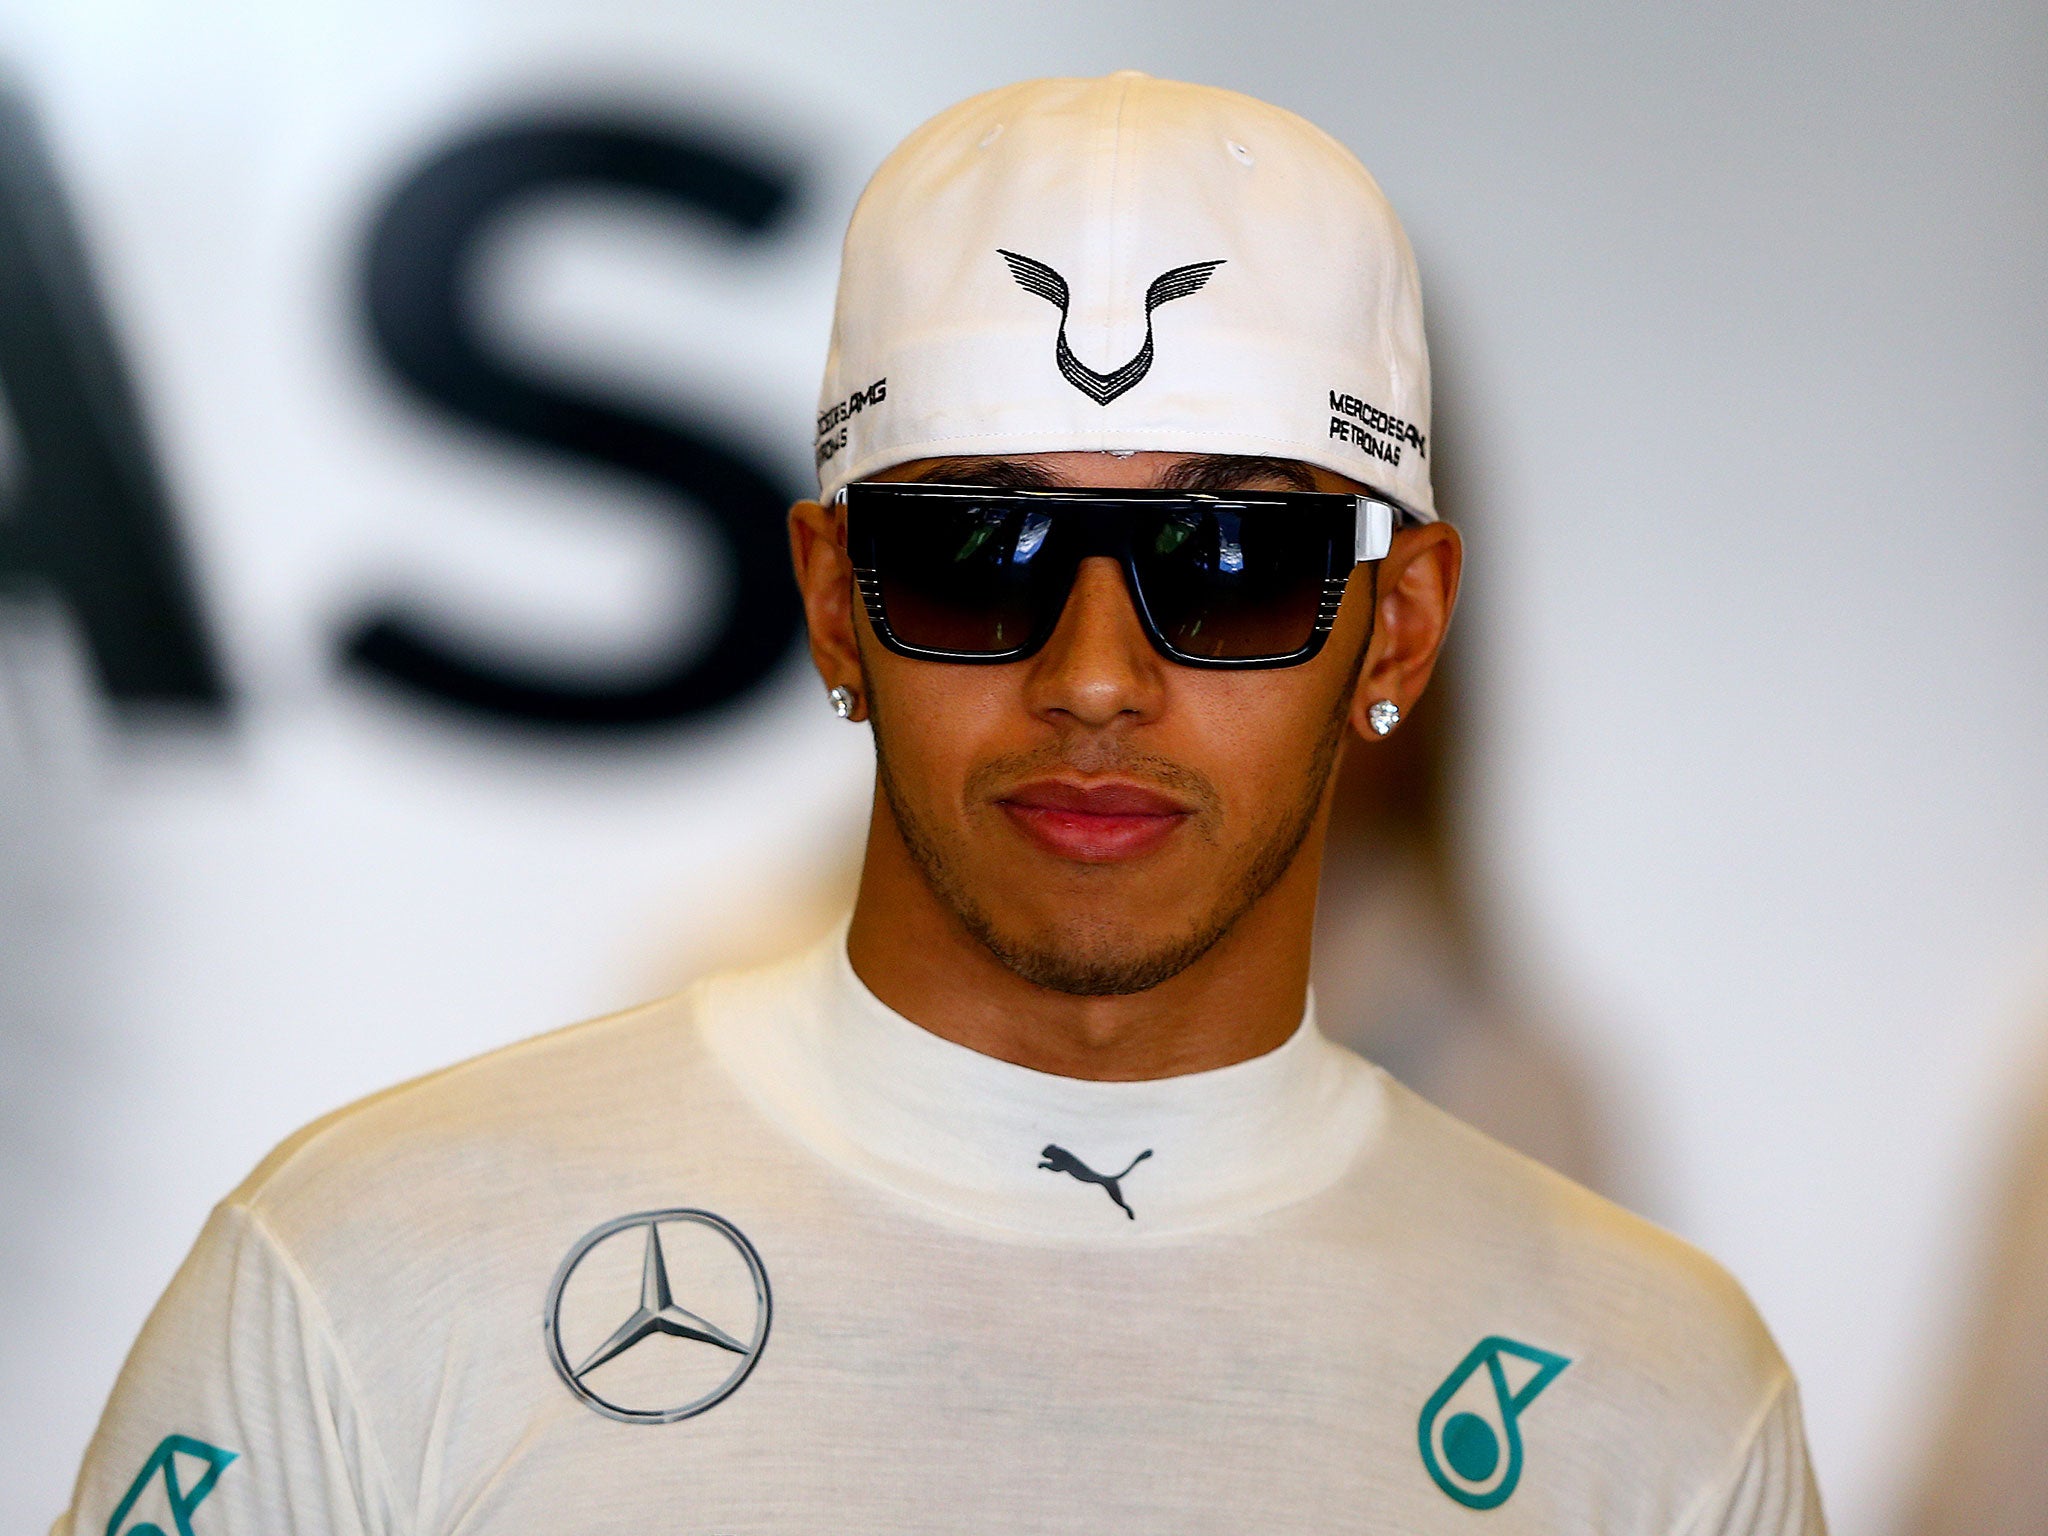 Lewis Hamilton ahead of the title decider in Abu Dhabi